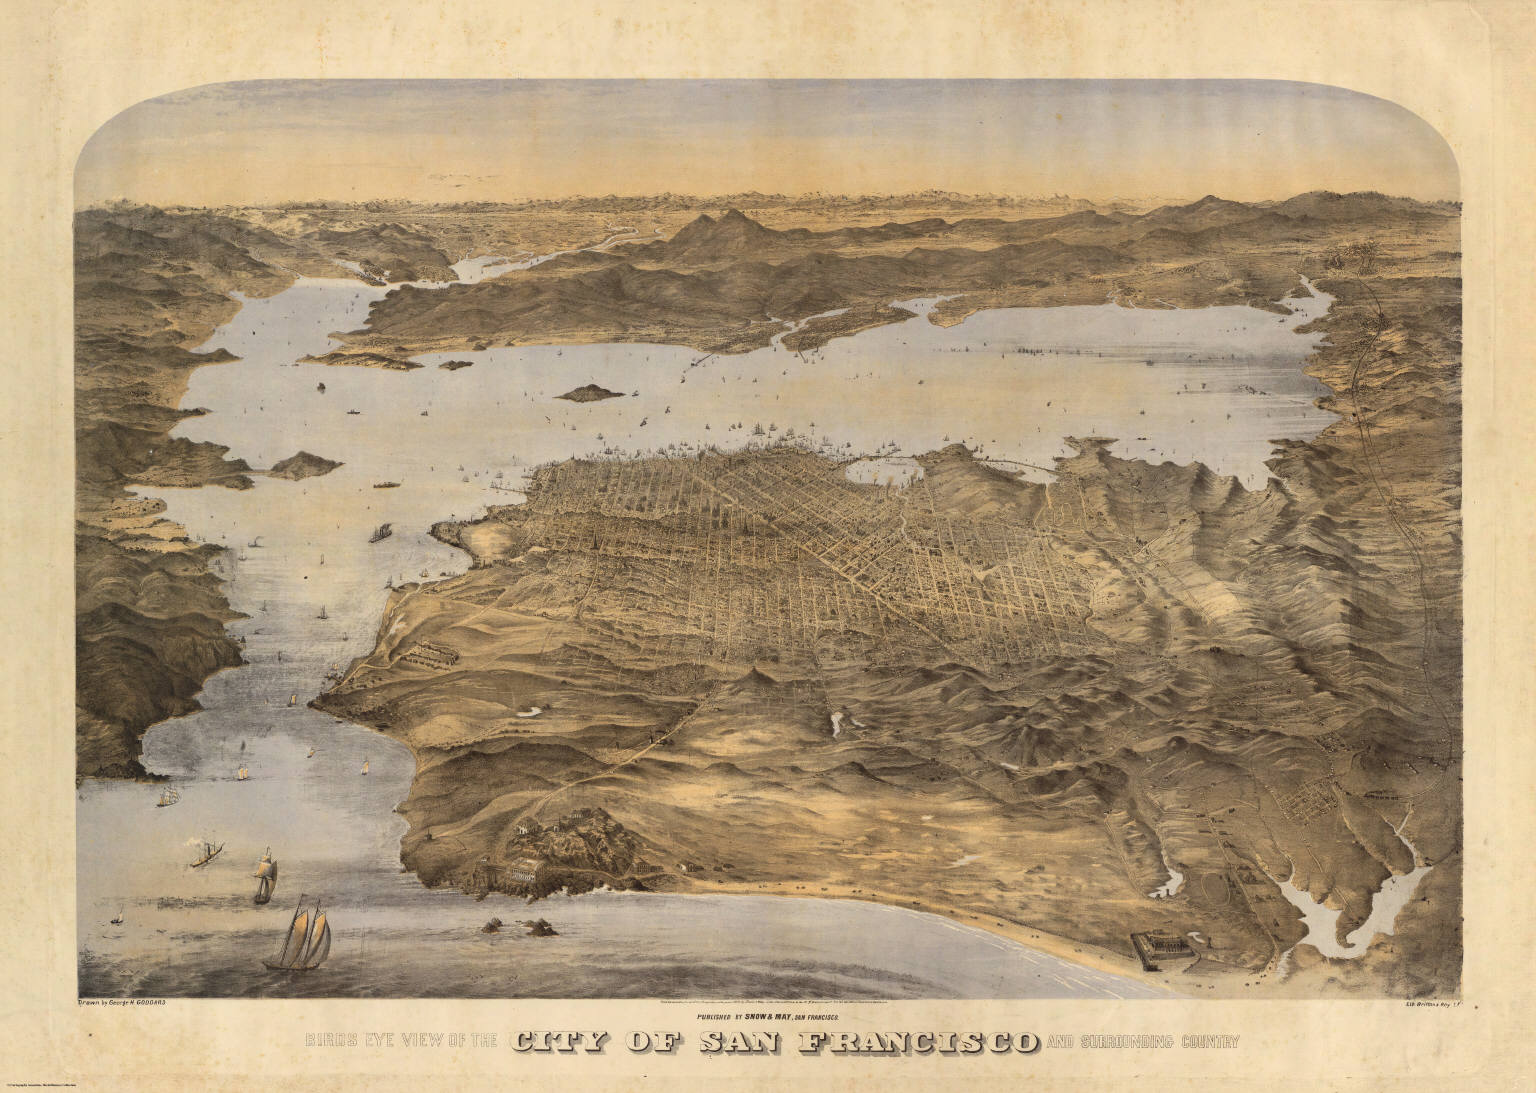 [San+Francisco+Birds+Eye+View+1868.jpg]